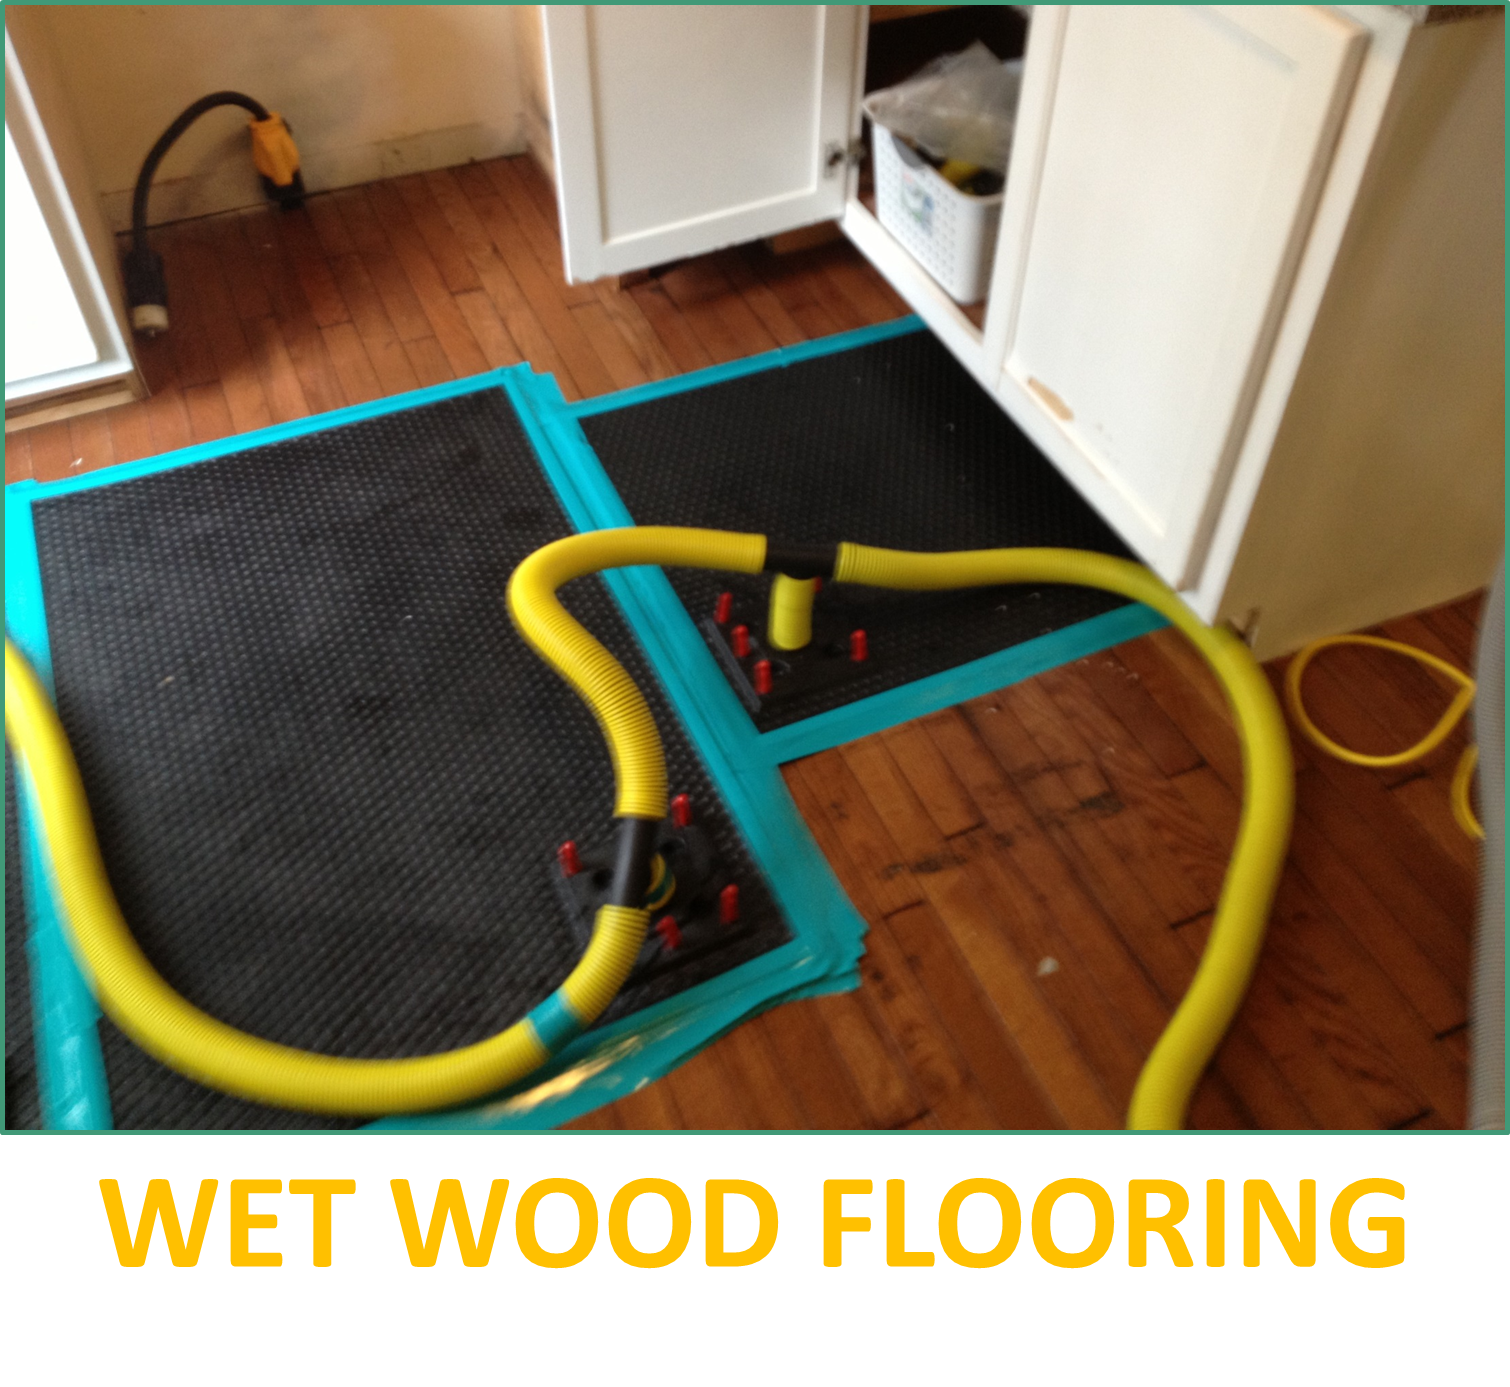 Pipe leak almost damaged wood flooring, Roofing Experts saved wood flooring!